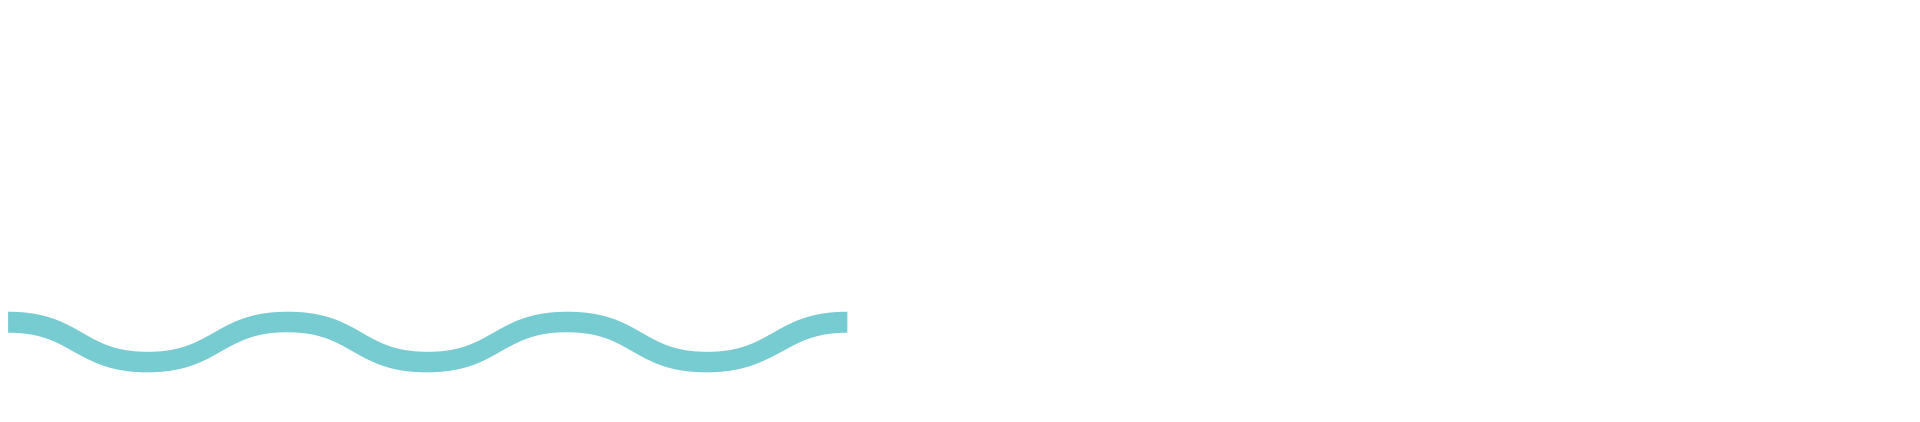 Wavecrest Energy logo